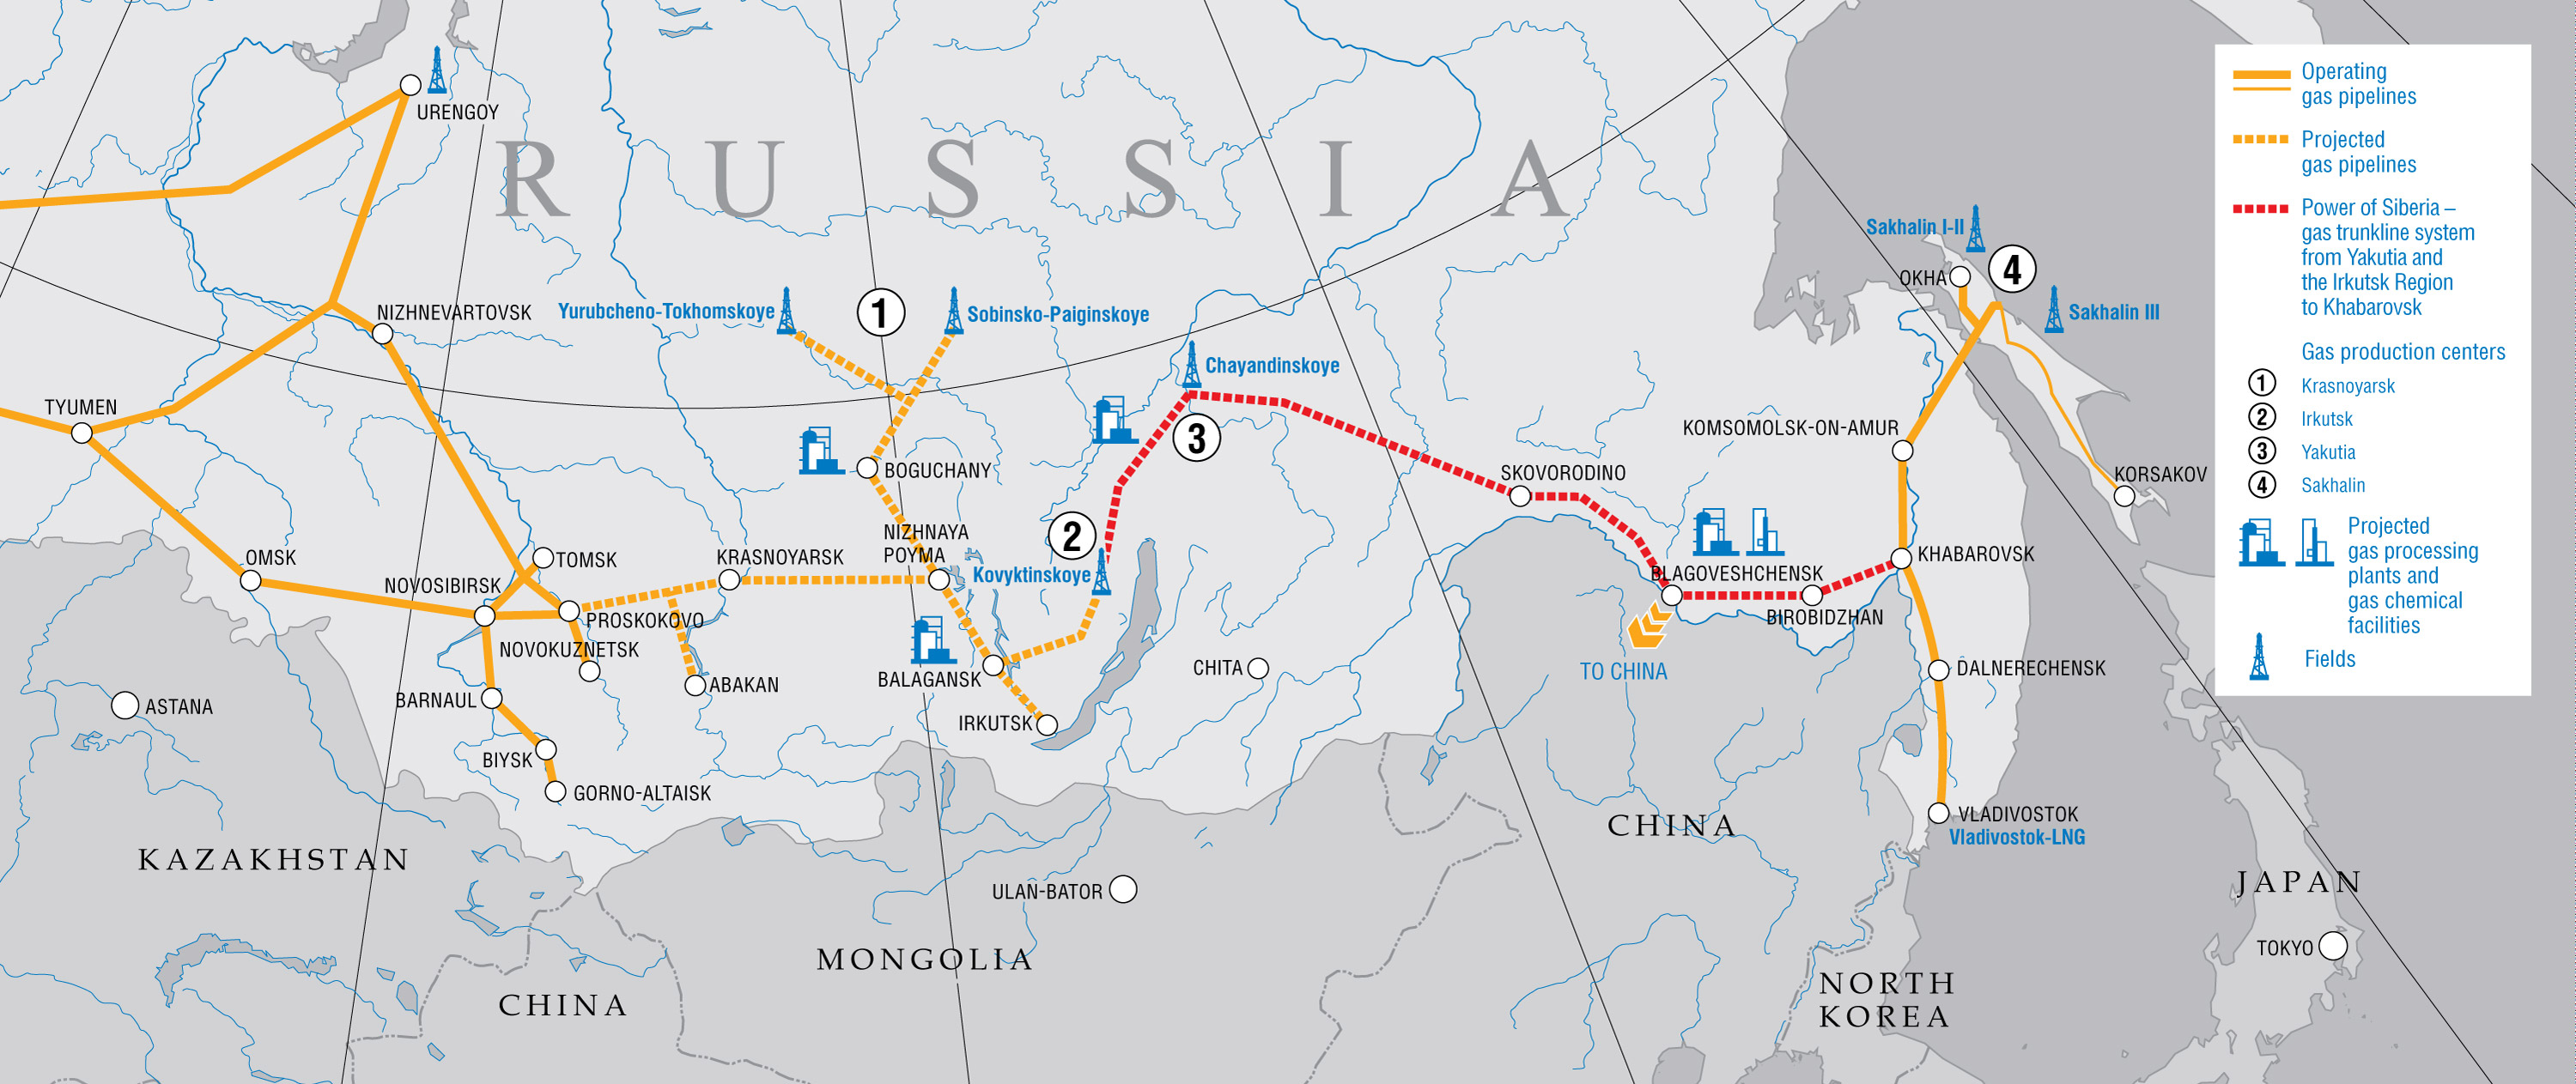 Power of Siberia pipeline map